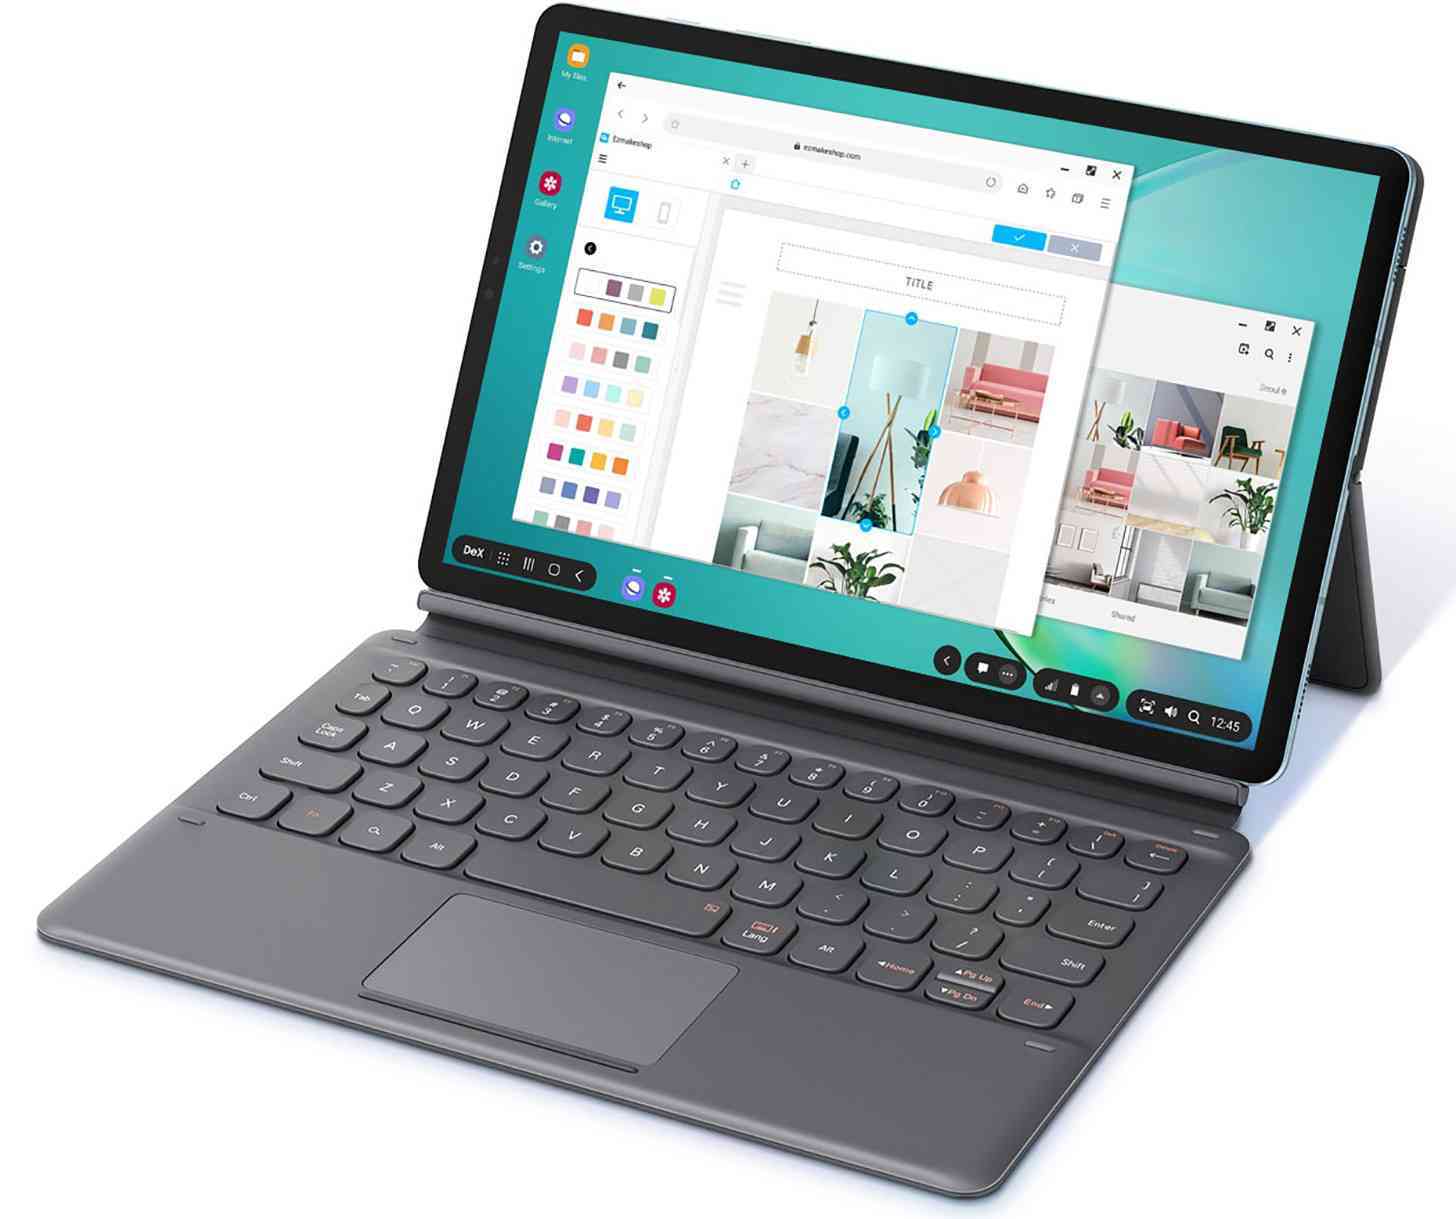 Samsung Galaxy Tab S6 with a keyboard